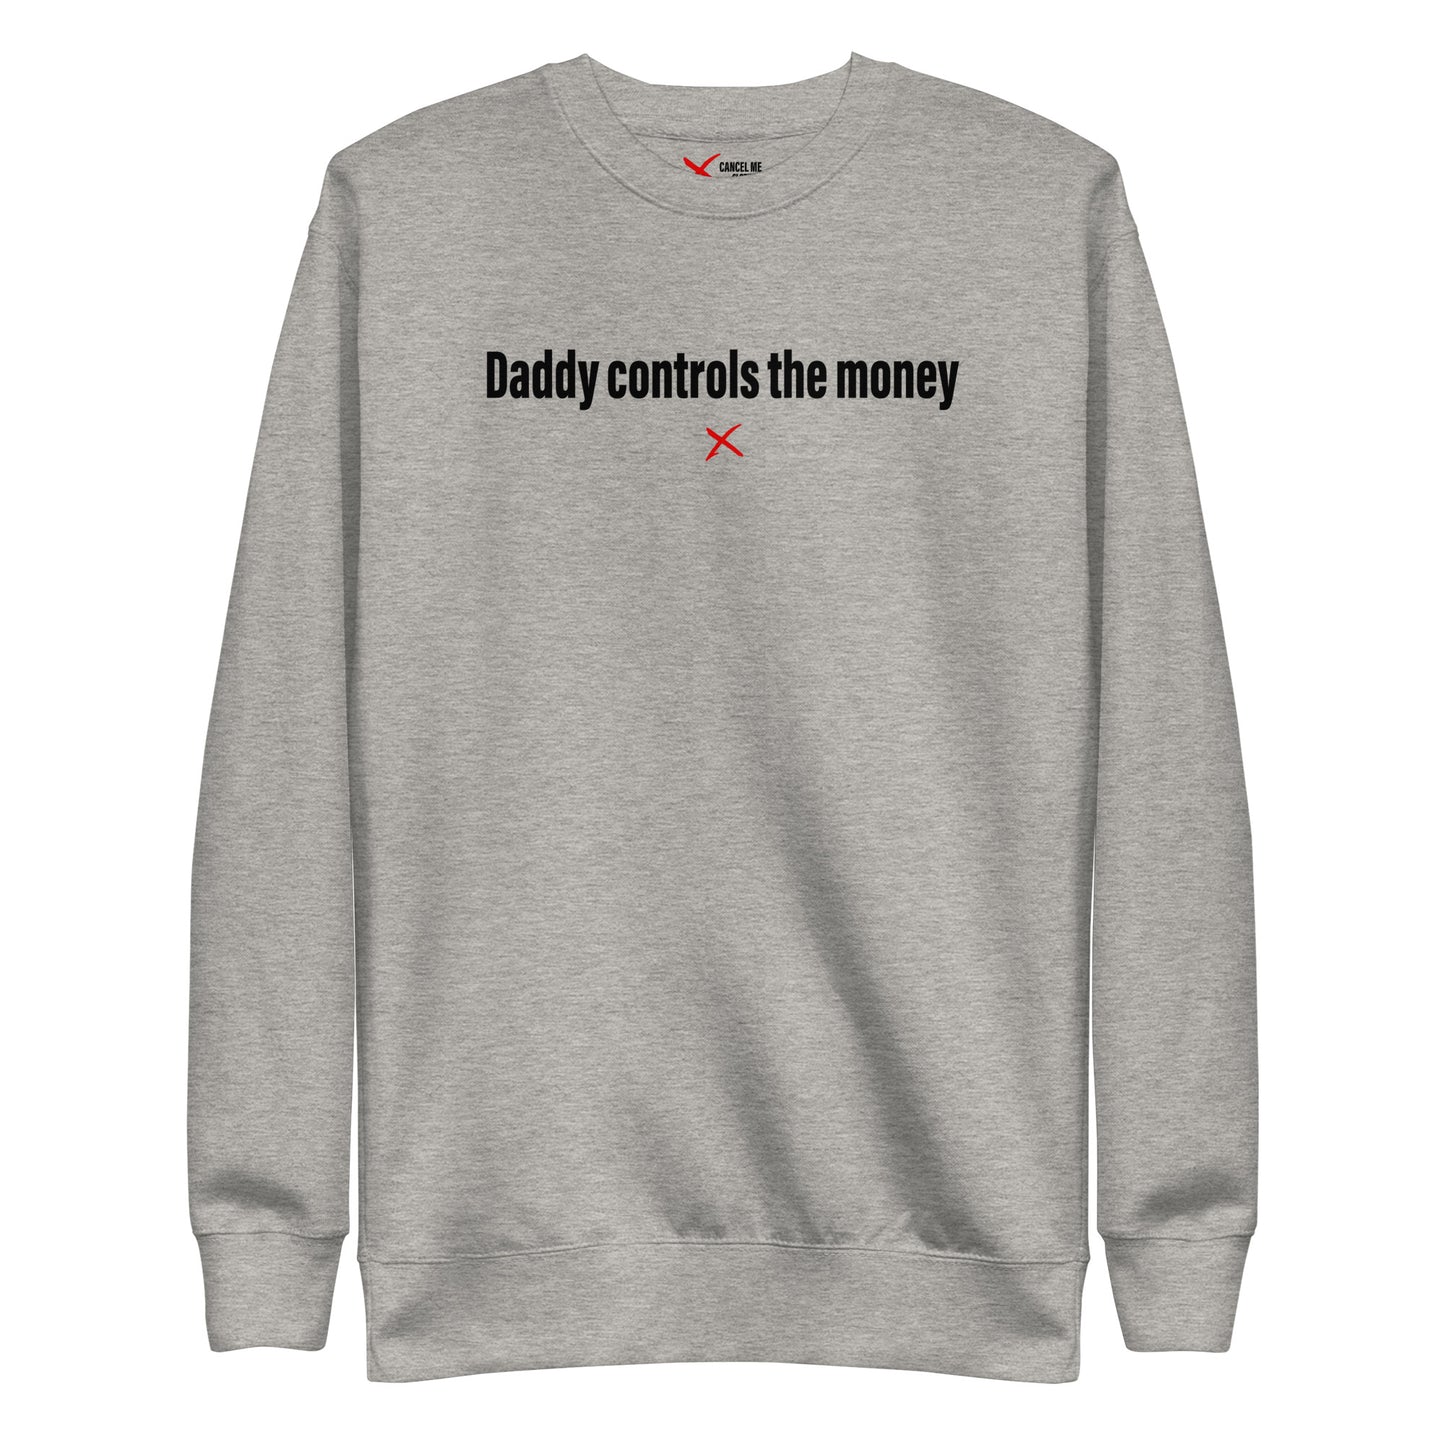 Daddy controls the money - Sweatshirt